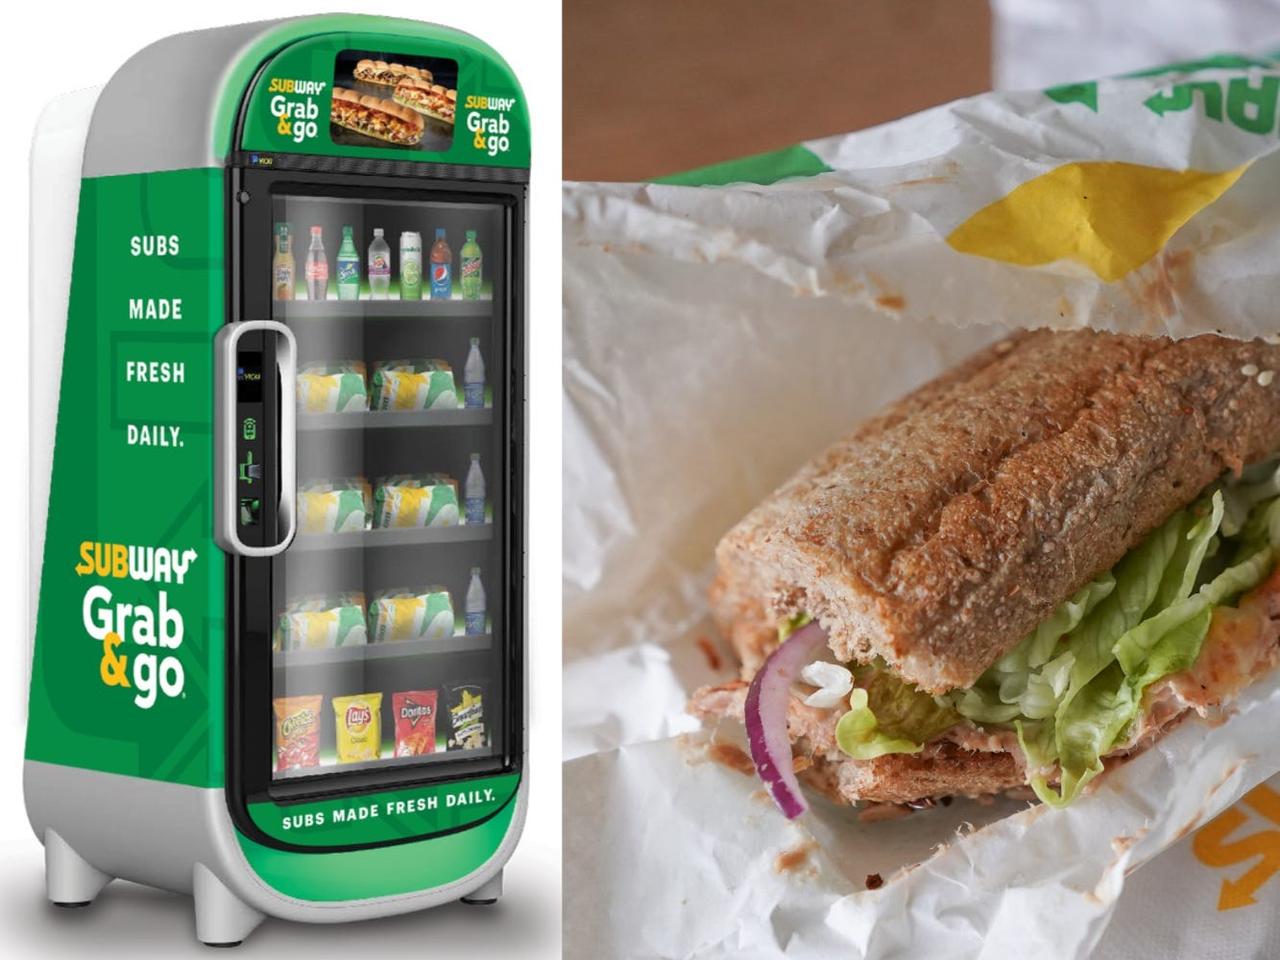 Subway smart fridge and sandwiches.